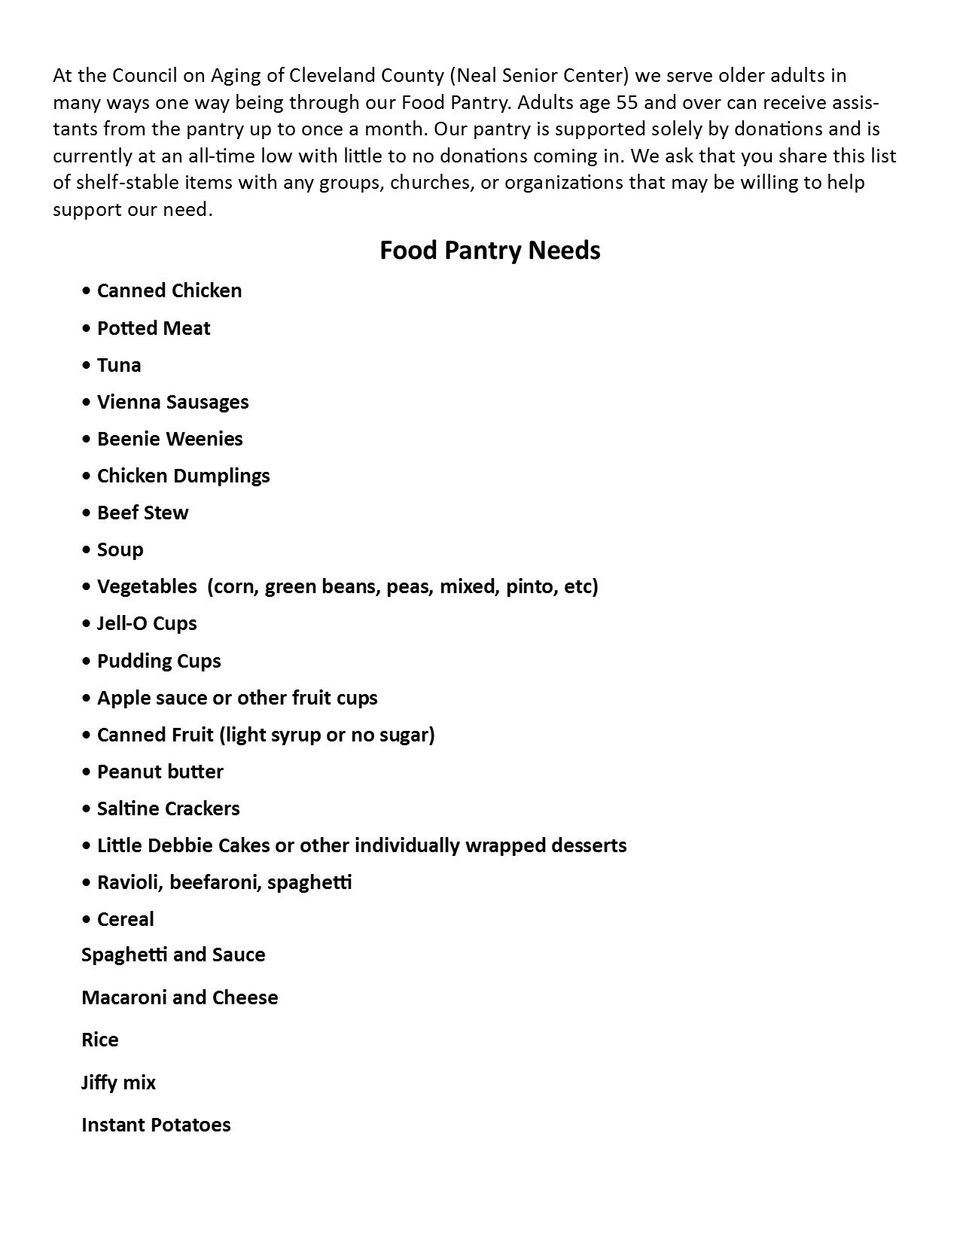 Food pantry items needed20180228 2497 1b8z546